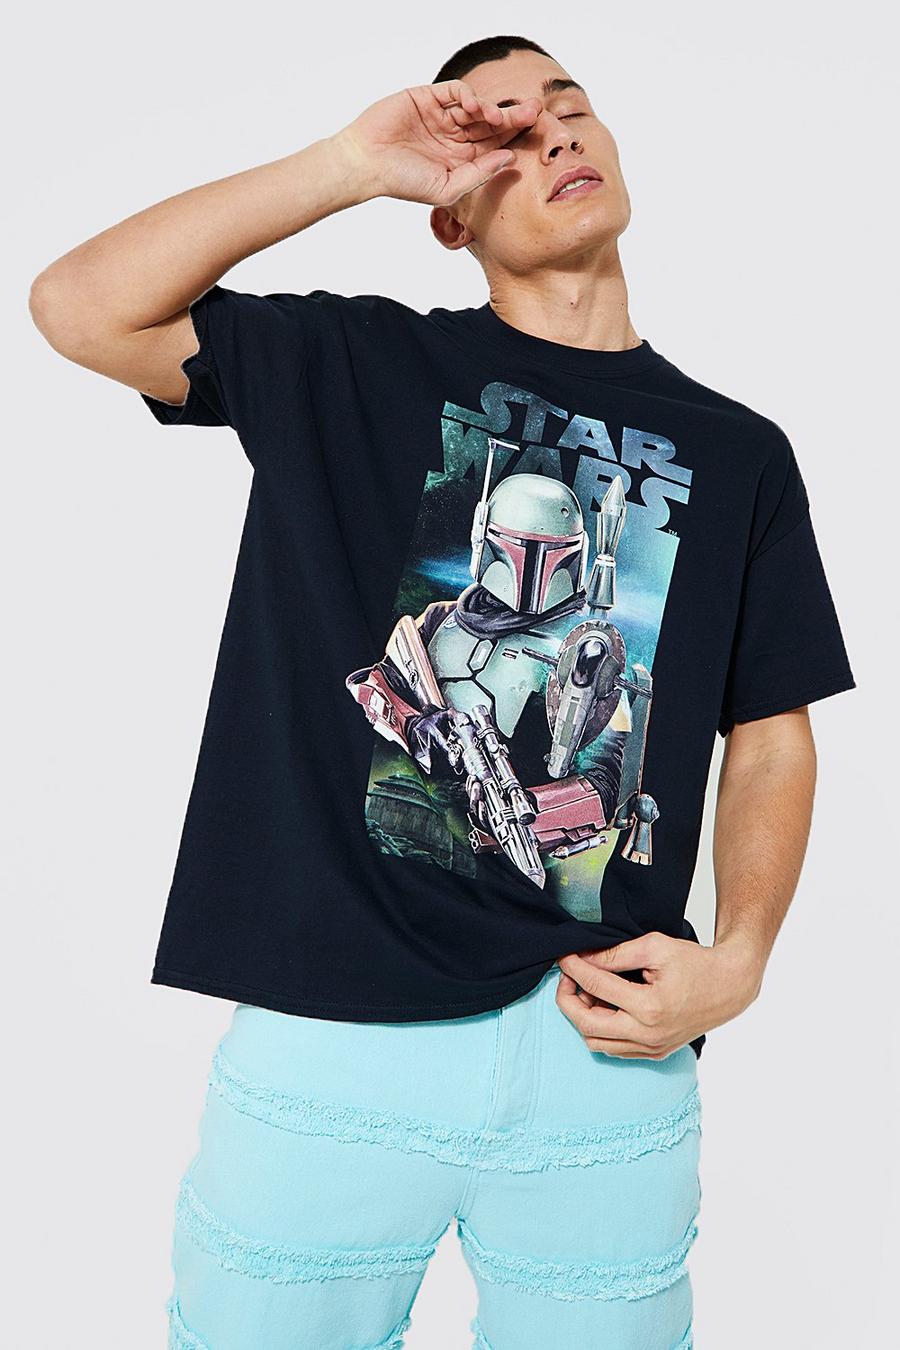 T-shirt oversize ufficiale Star Wars, Black negro